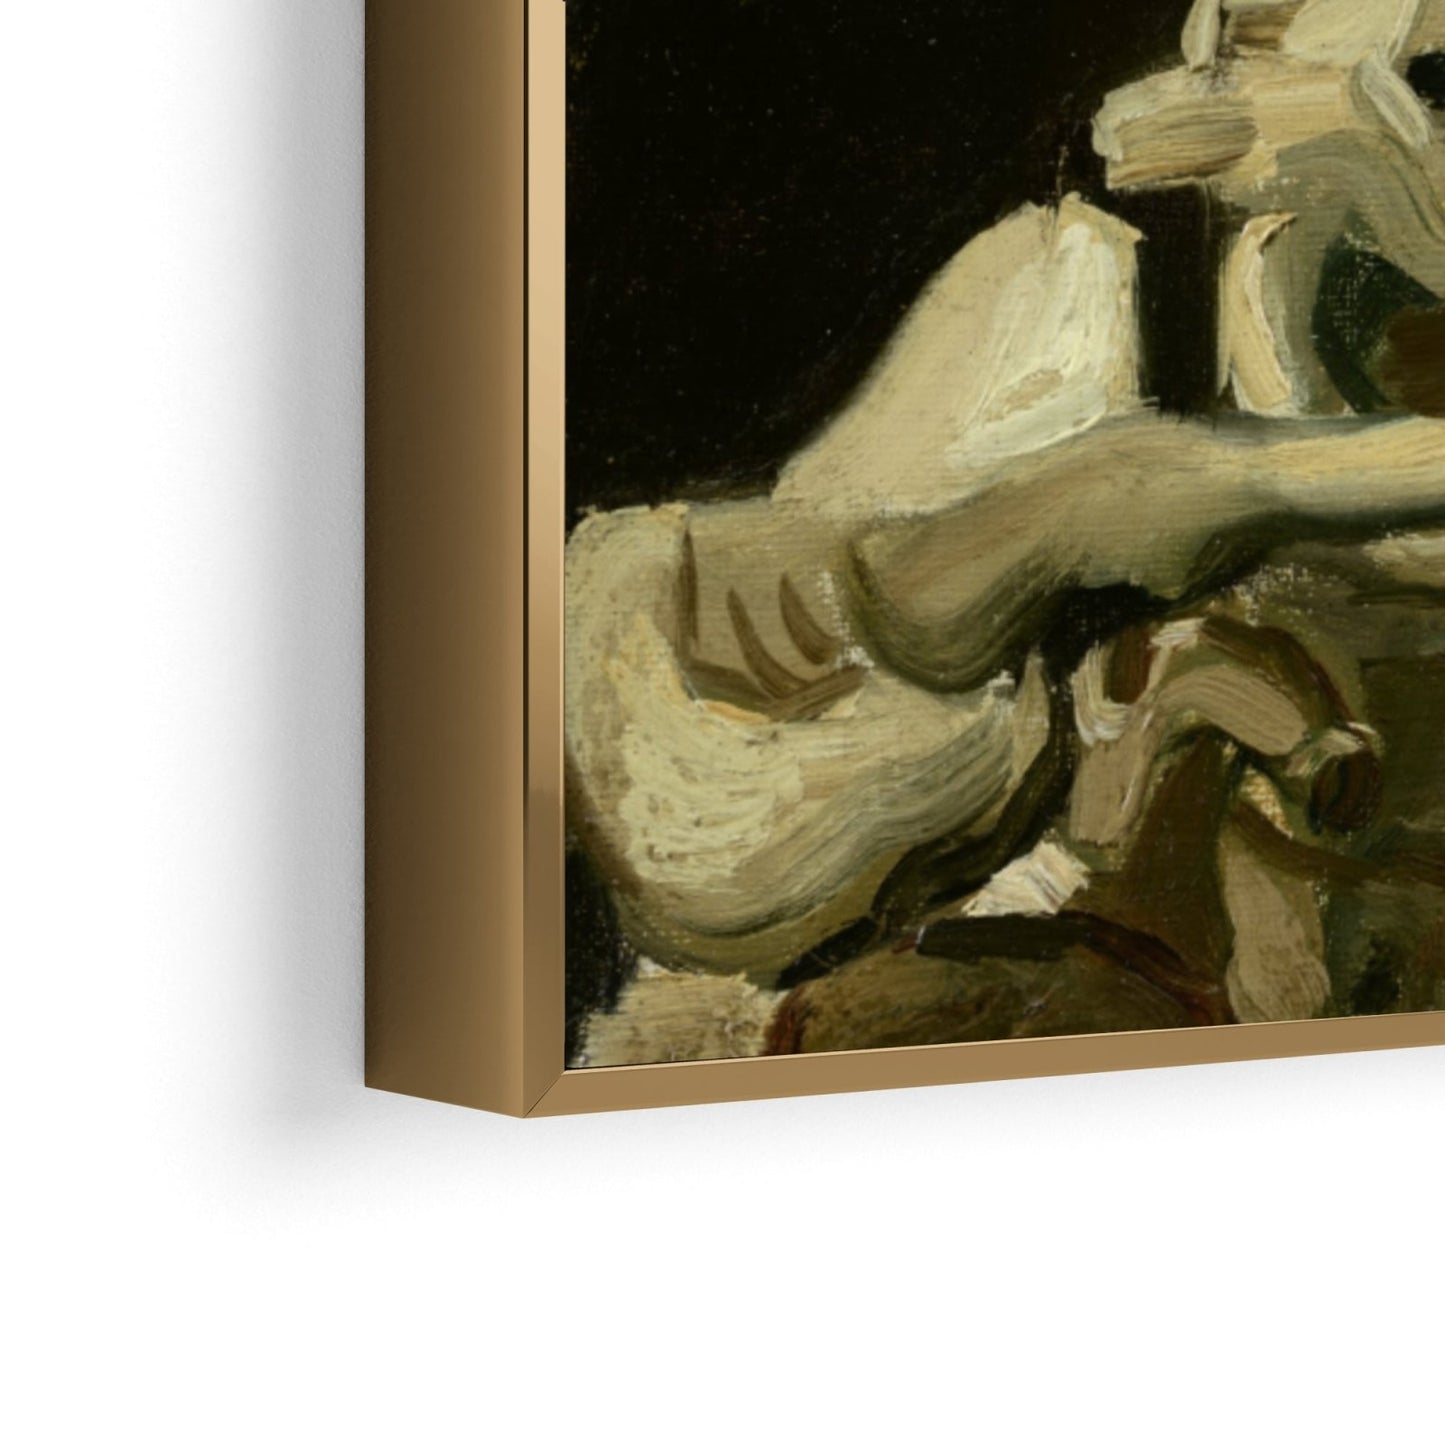 Kaukolė su cigarete, Vincentas Van Gogas